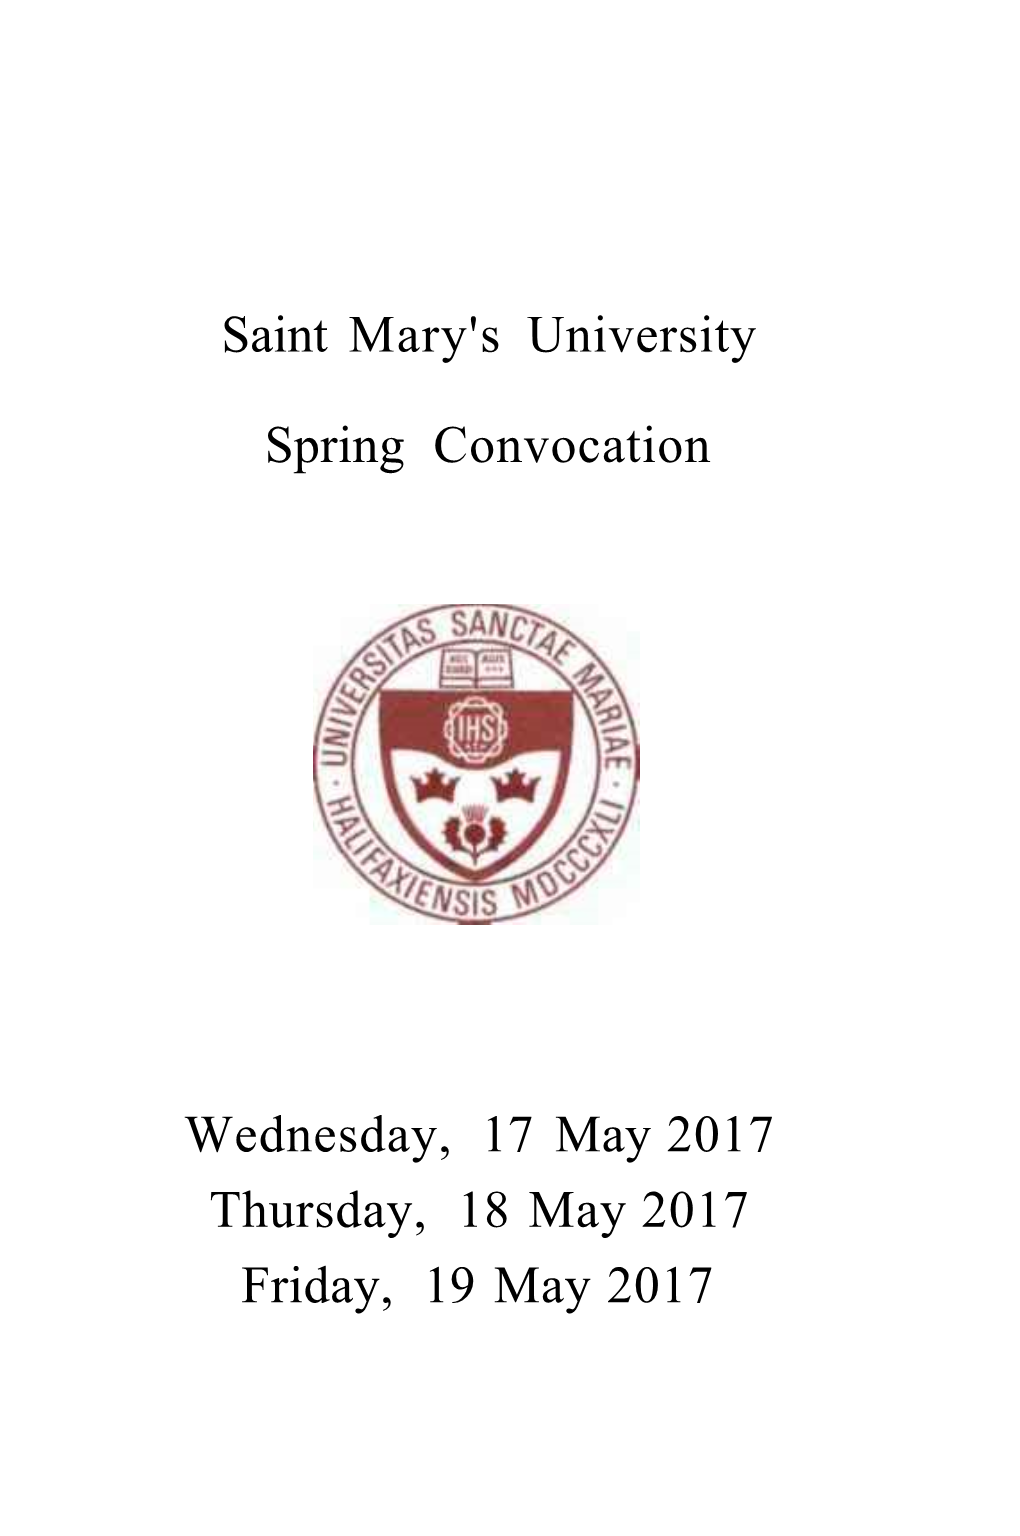 Saint Mary's University Spring Convocation Wednesday, 17 May